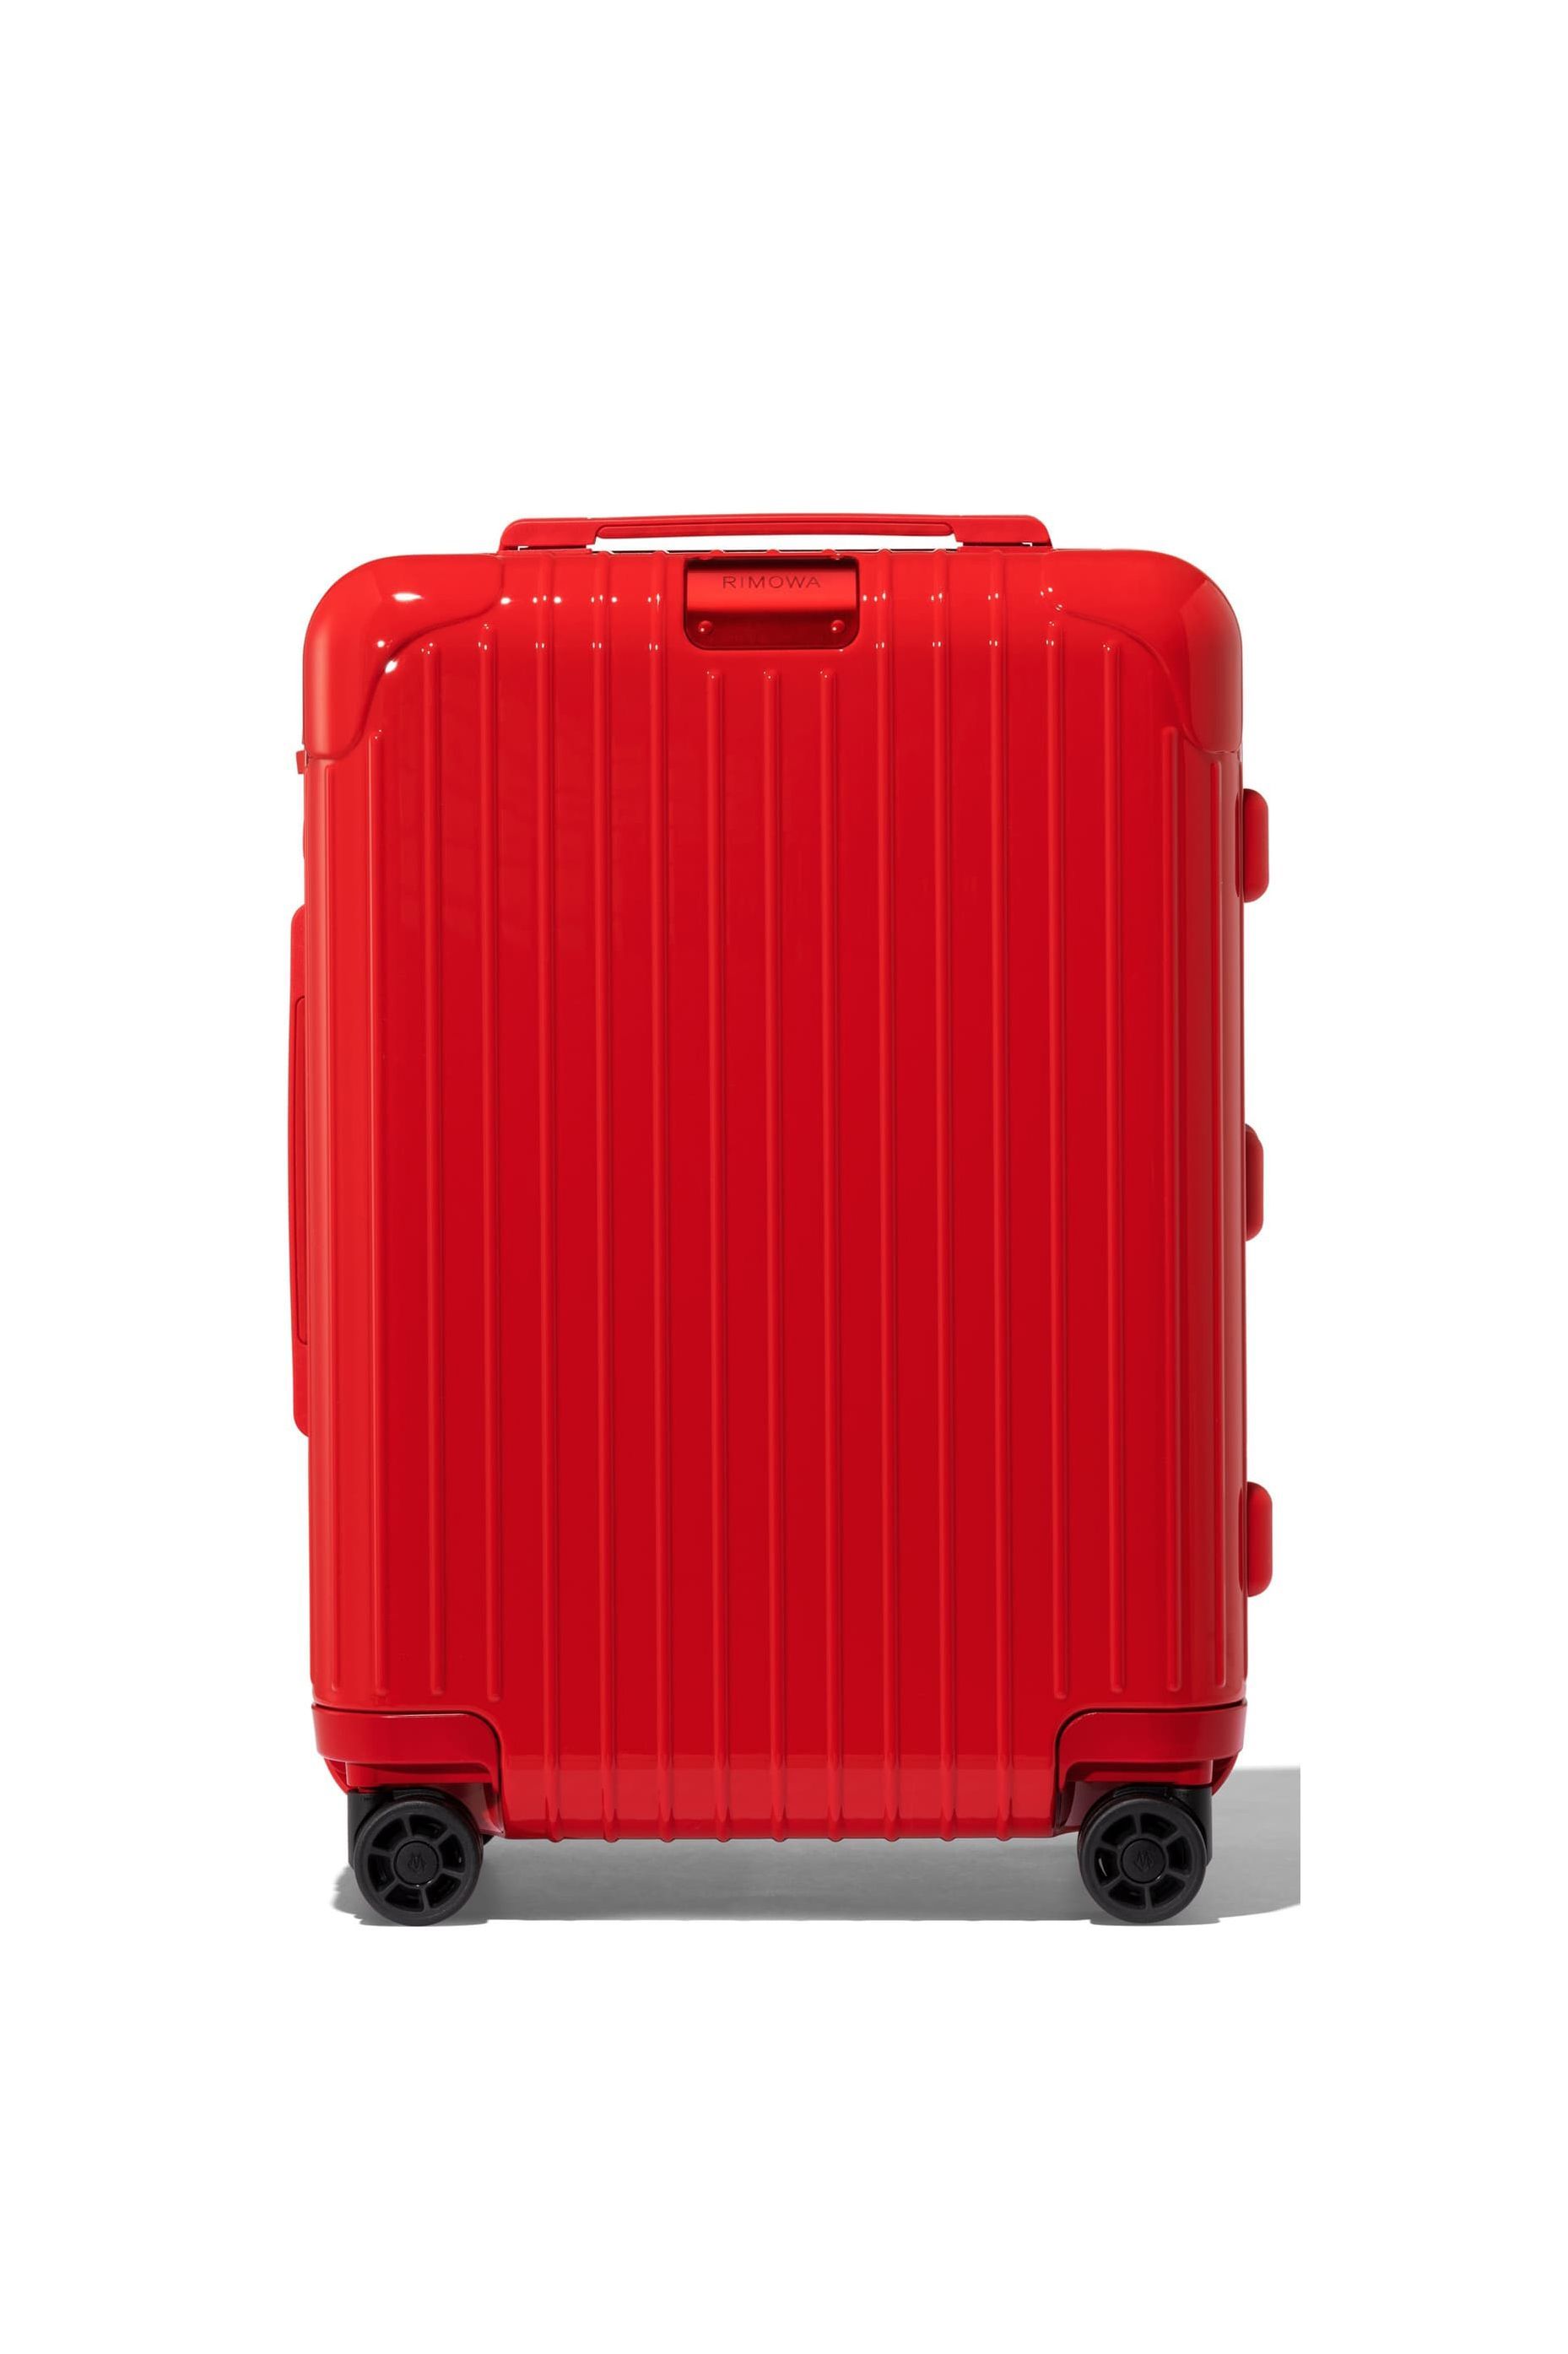 rimowa luggage review 2019